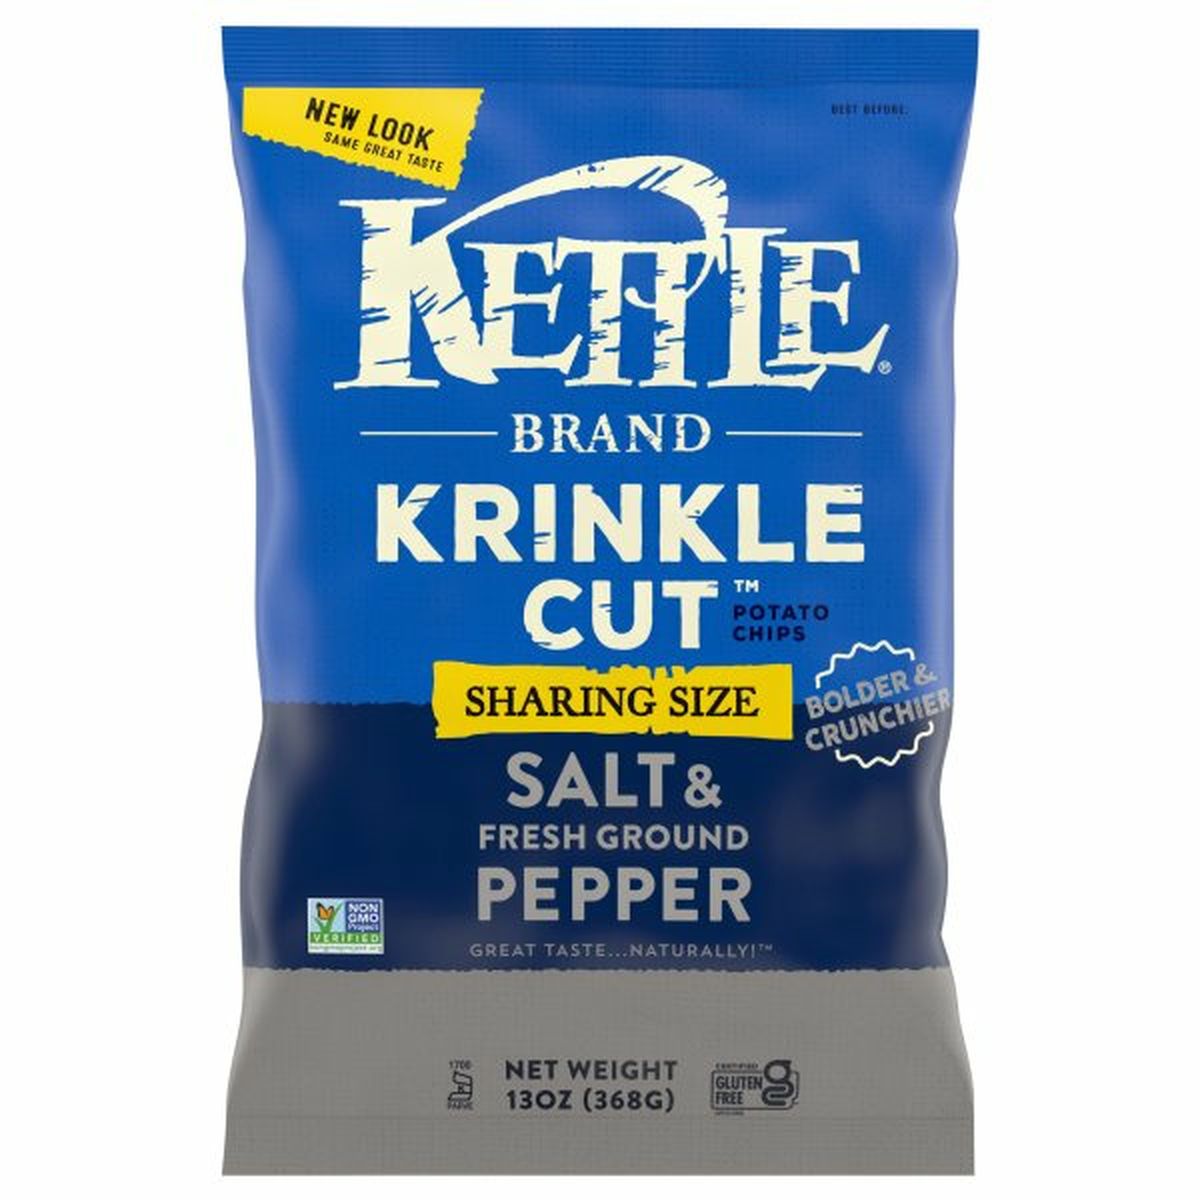 Calories in Kettle Brands Krinkle Cut Potato Chips, Salt & Fresh Ground Pepper, Sharing Size